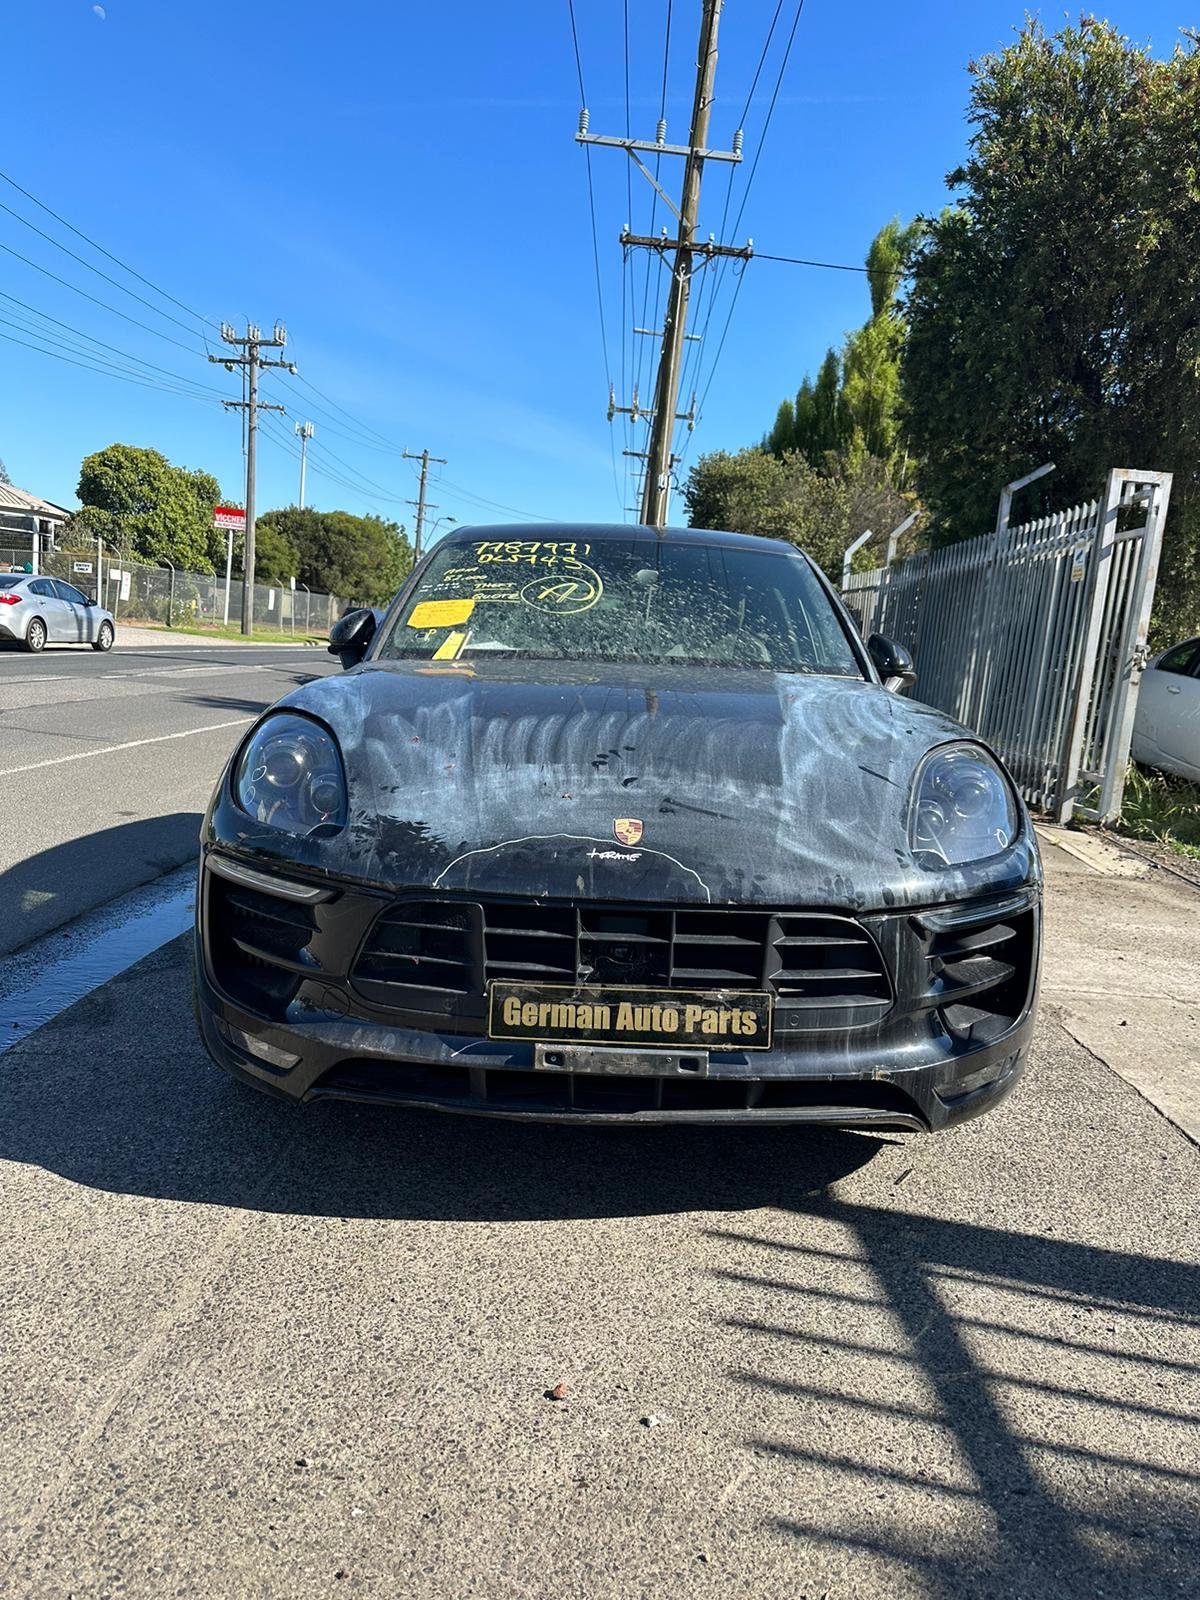 Porsche Parts in Melbourne, Victoria